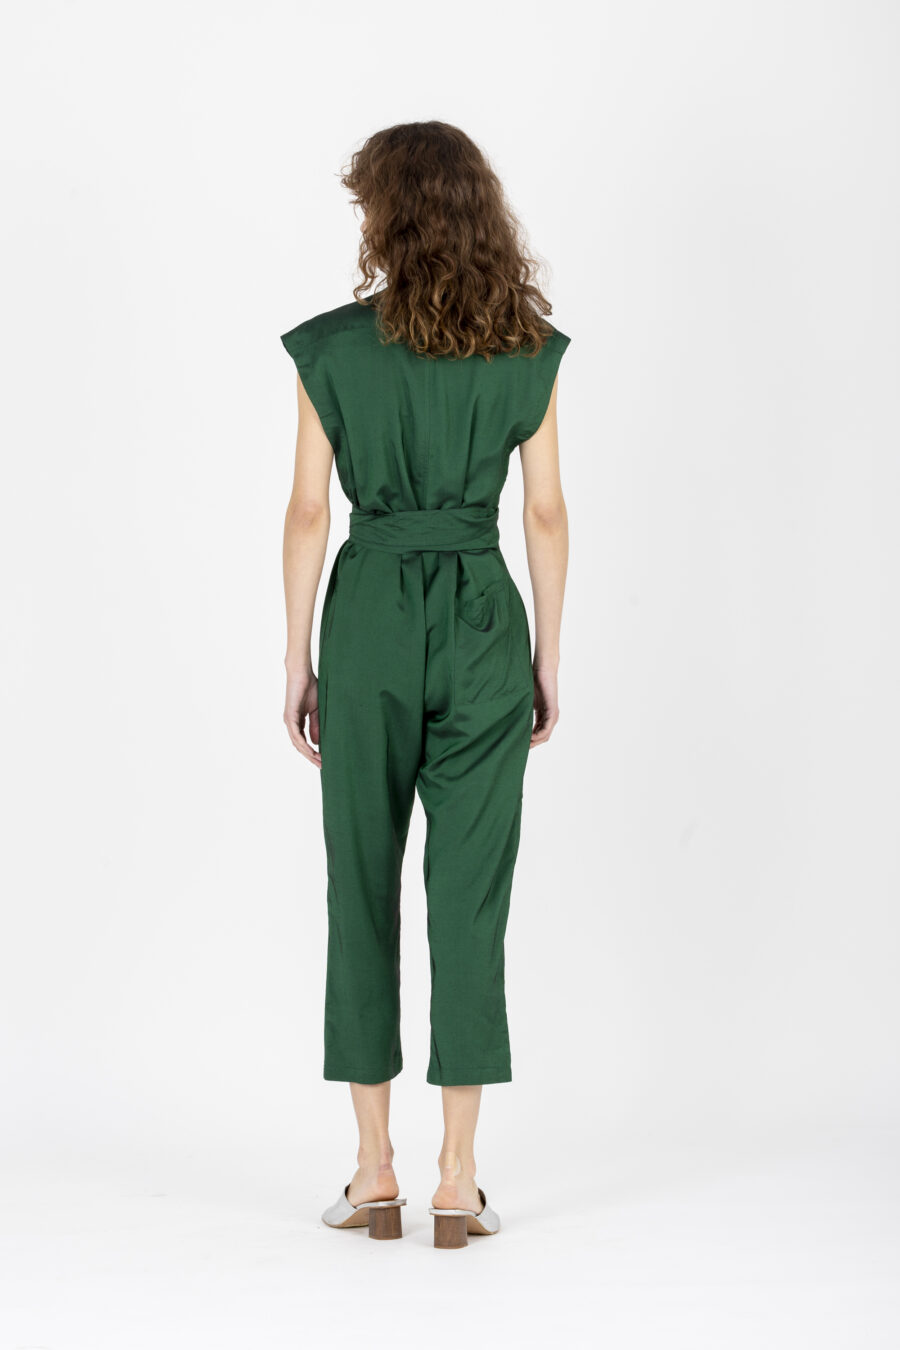 lana-green-jumpsuit-uniforme-athens